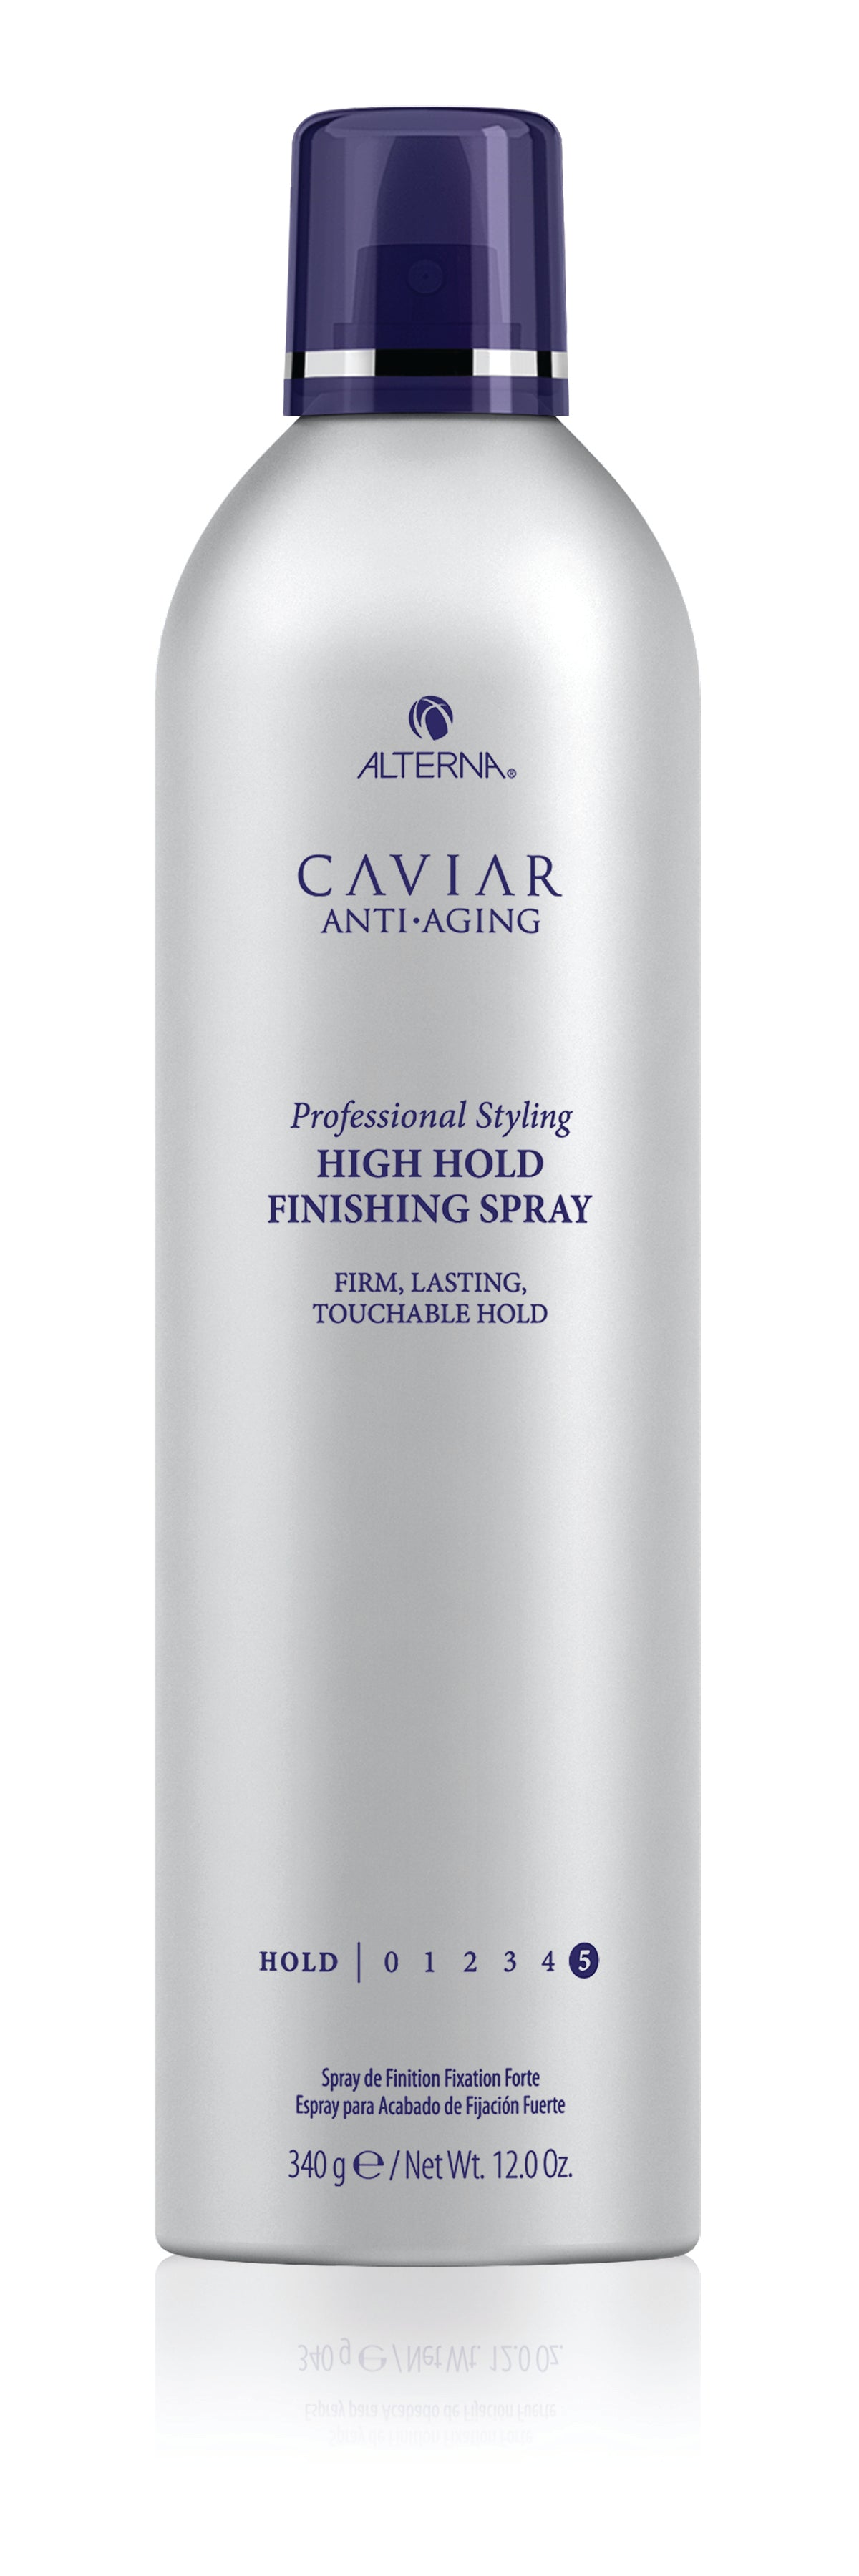 Alterna Caviar Anti-Aging Professional Styling High Hold Finish-Spray 340 g